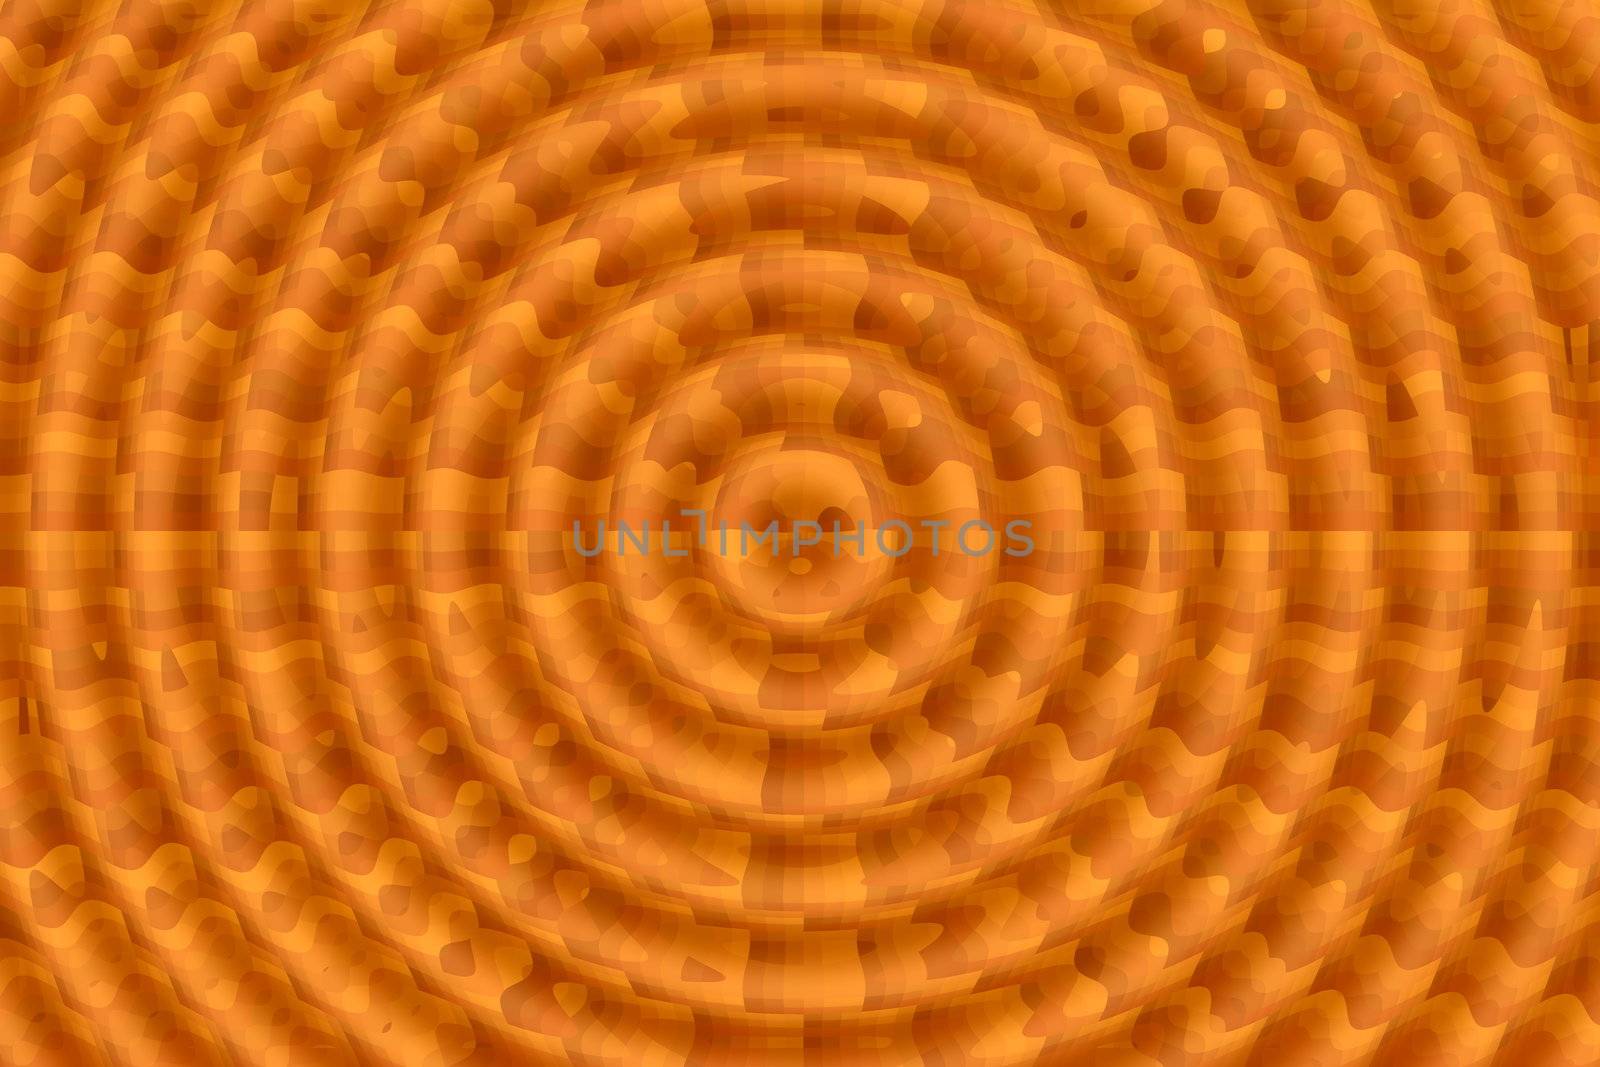  Abstract orange circle mosaic background or wallpaper pattern